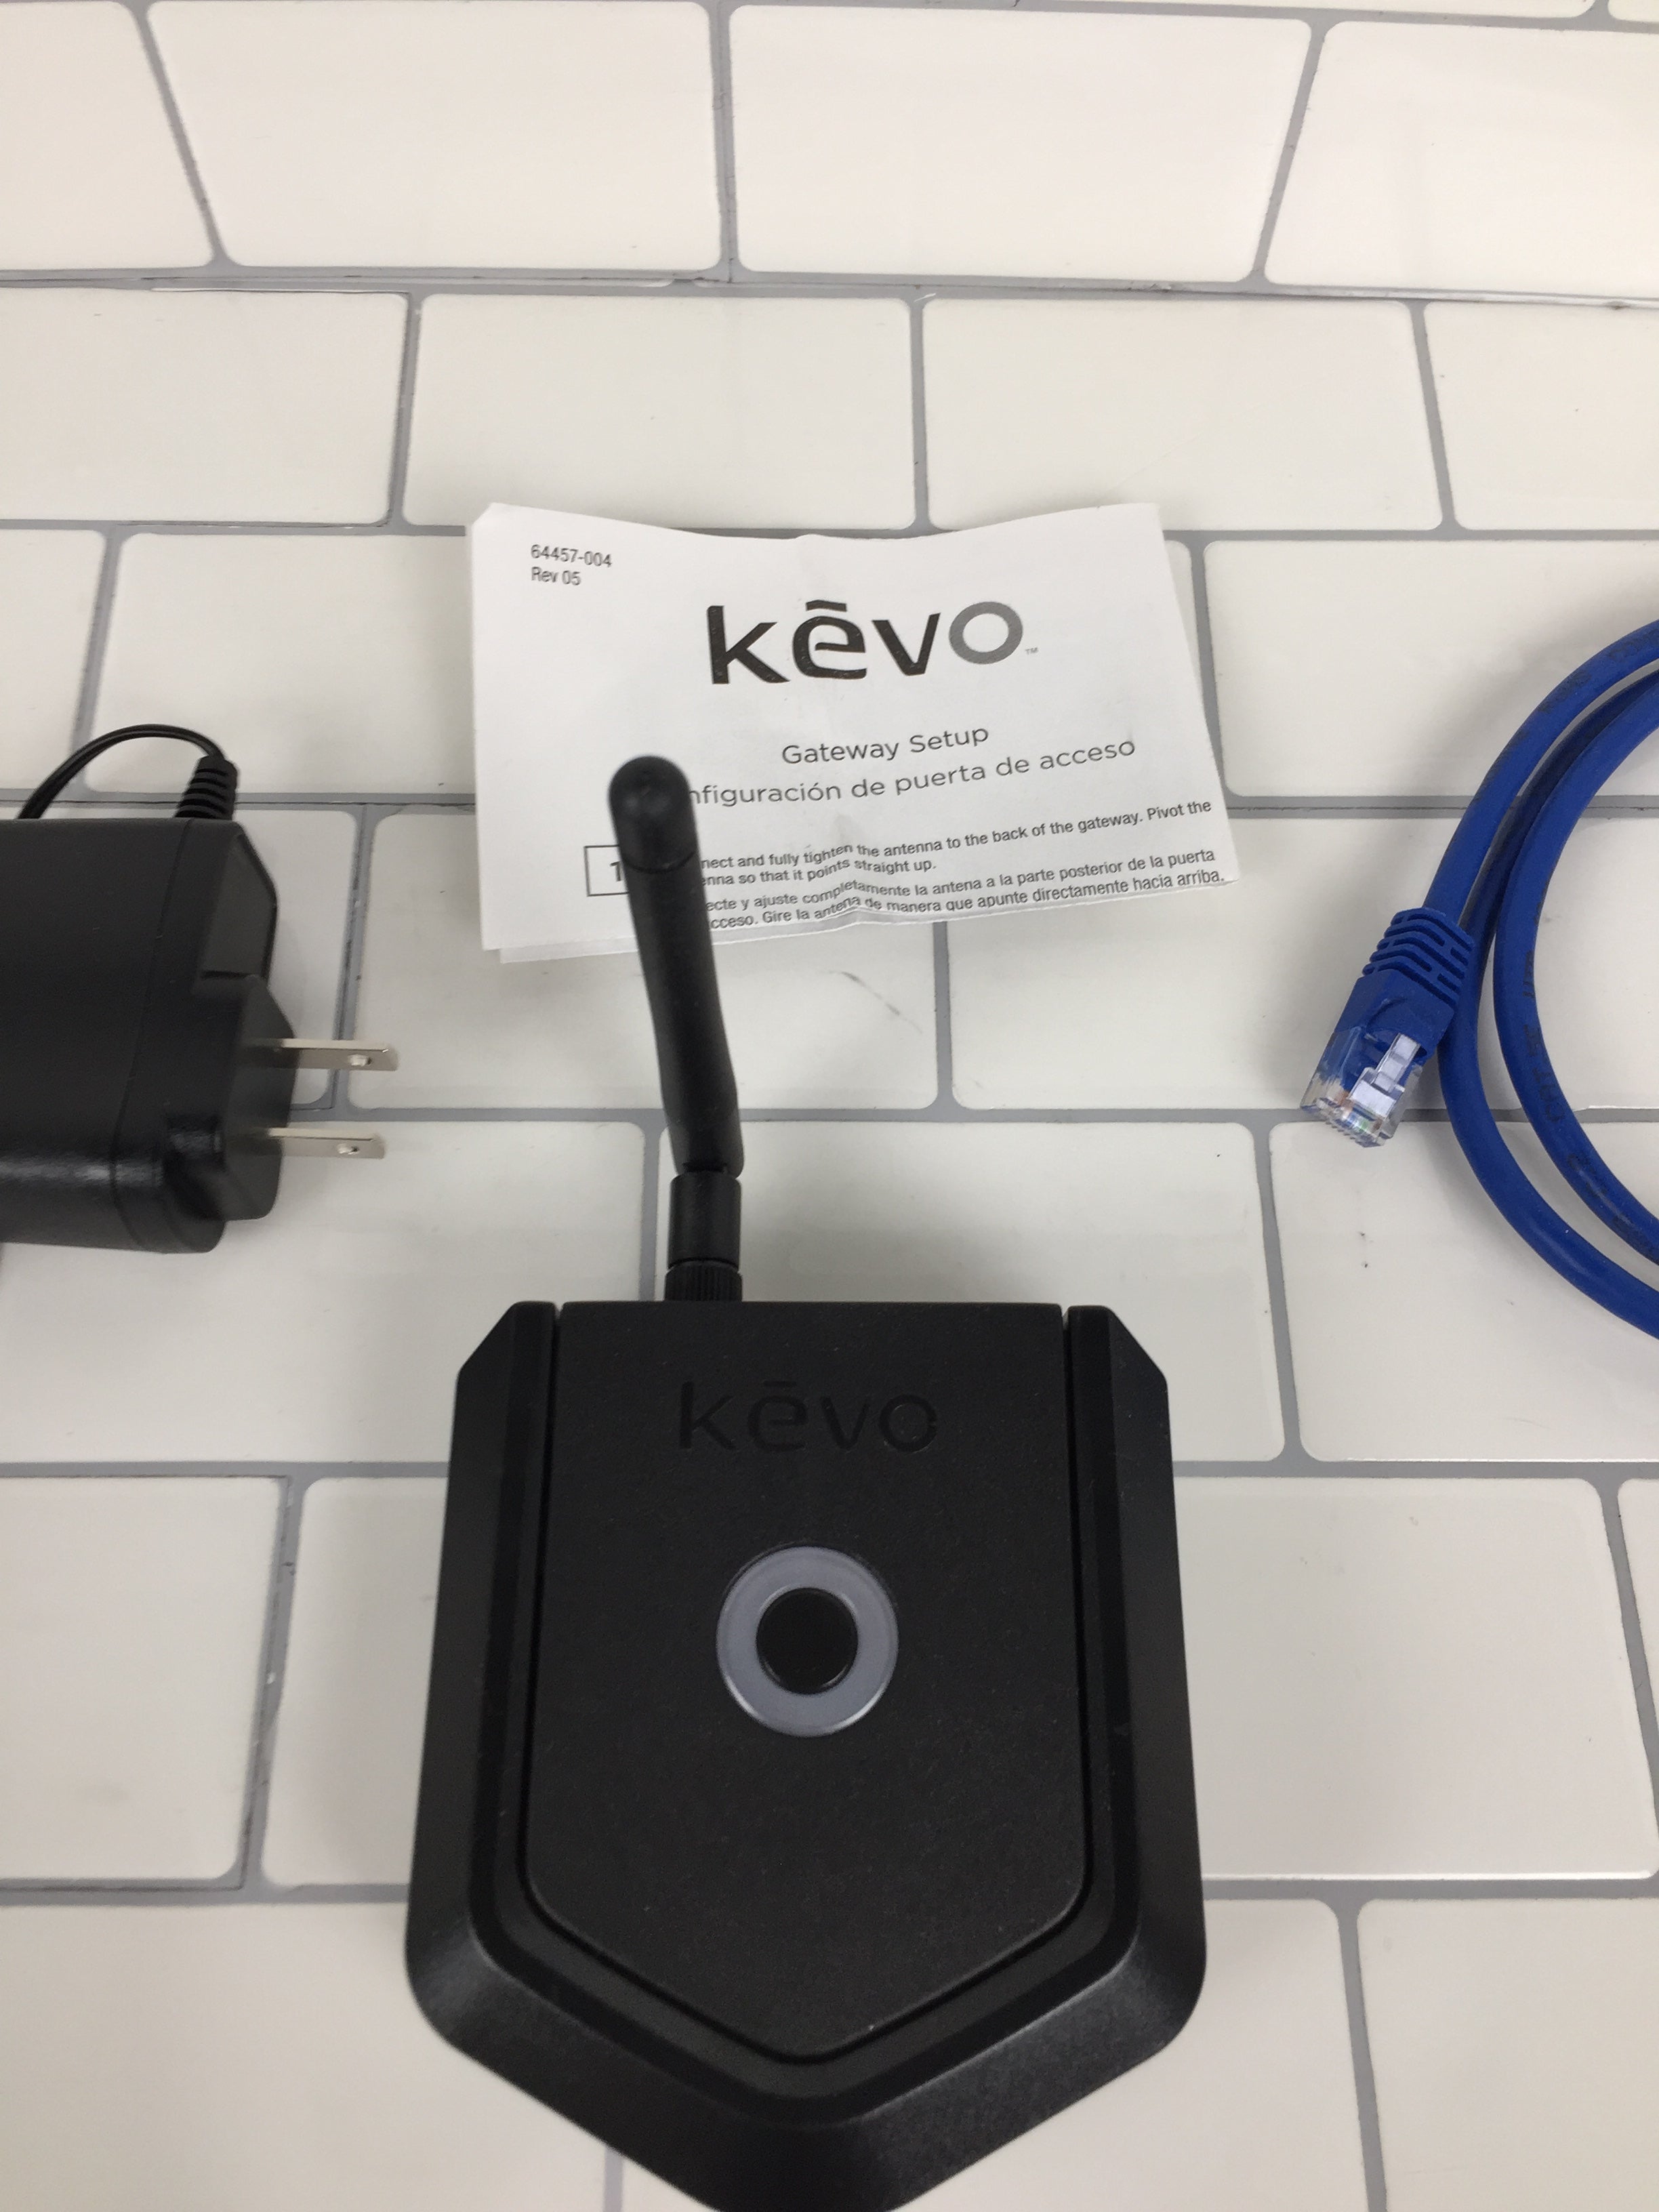 Kevo Plus Connected Smart Hub 99240-001 to Lock & Unlock Anywhere (7345133781230)